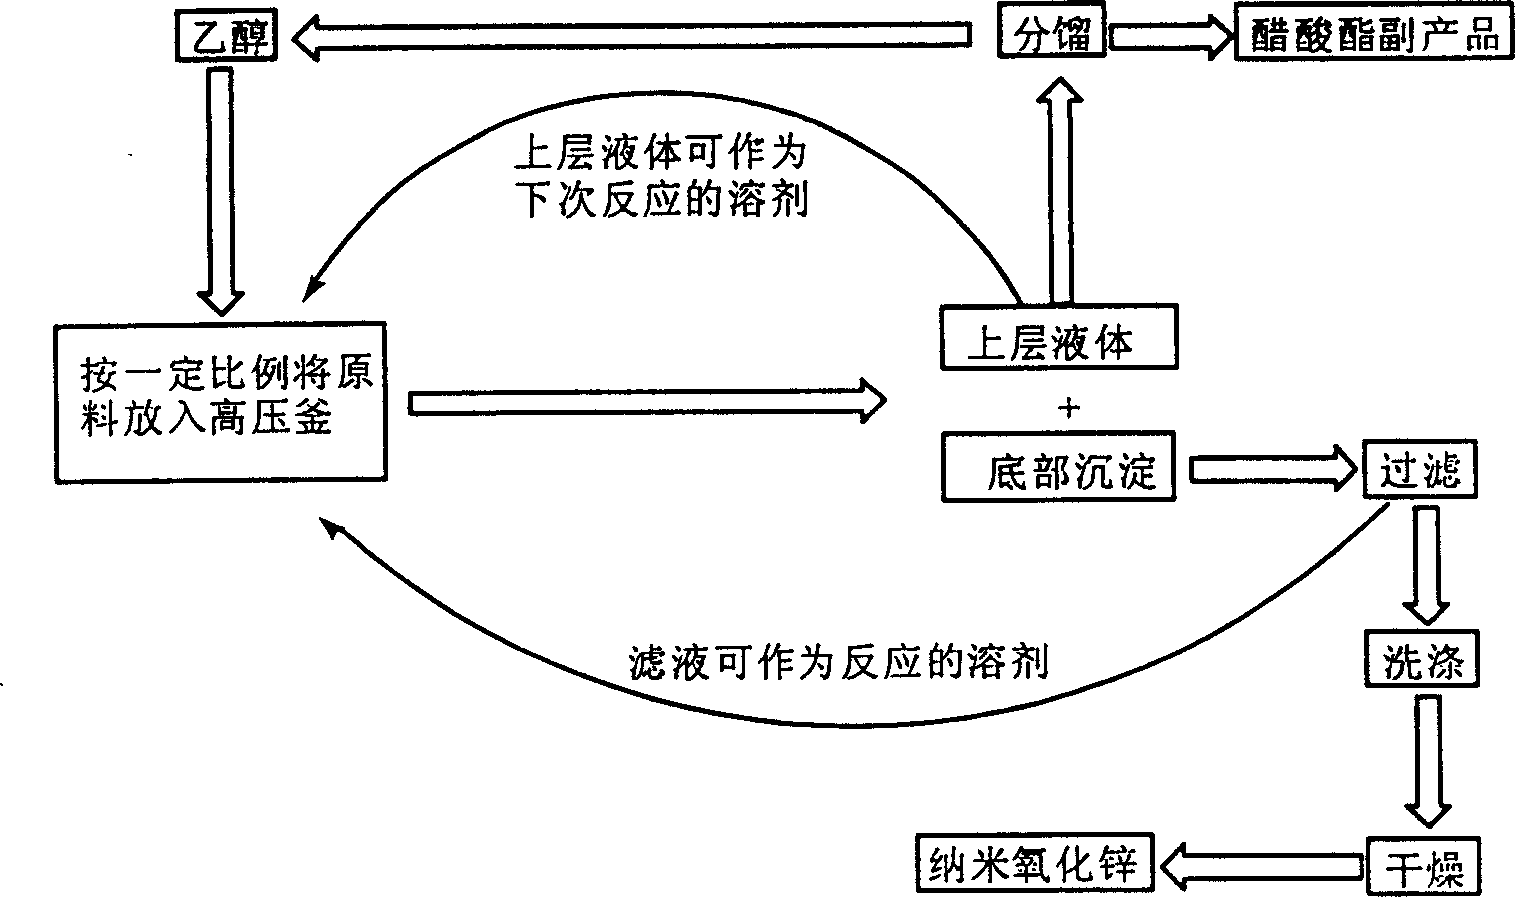 Process for preparing nano zinc oxide